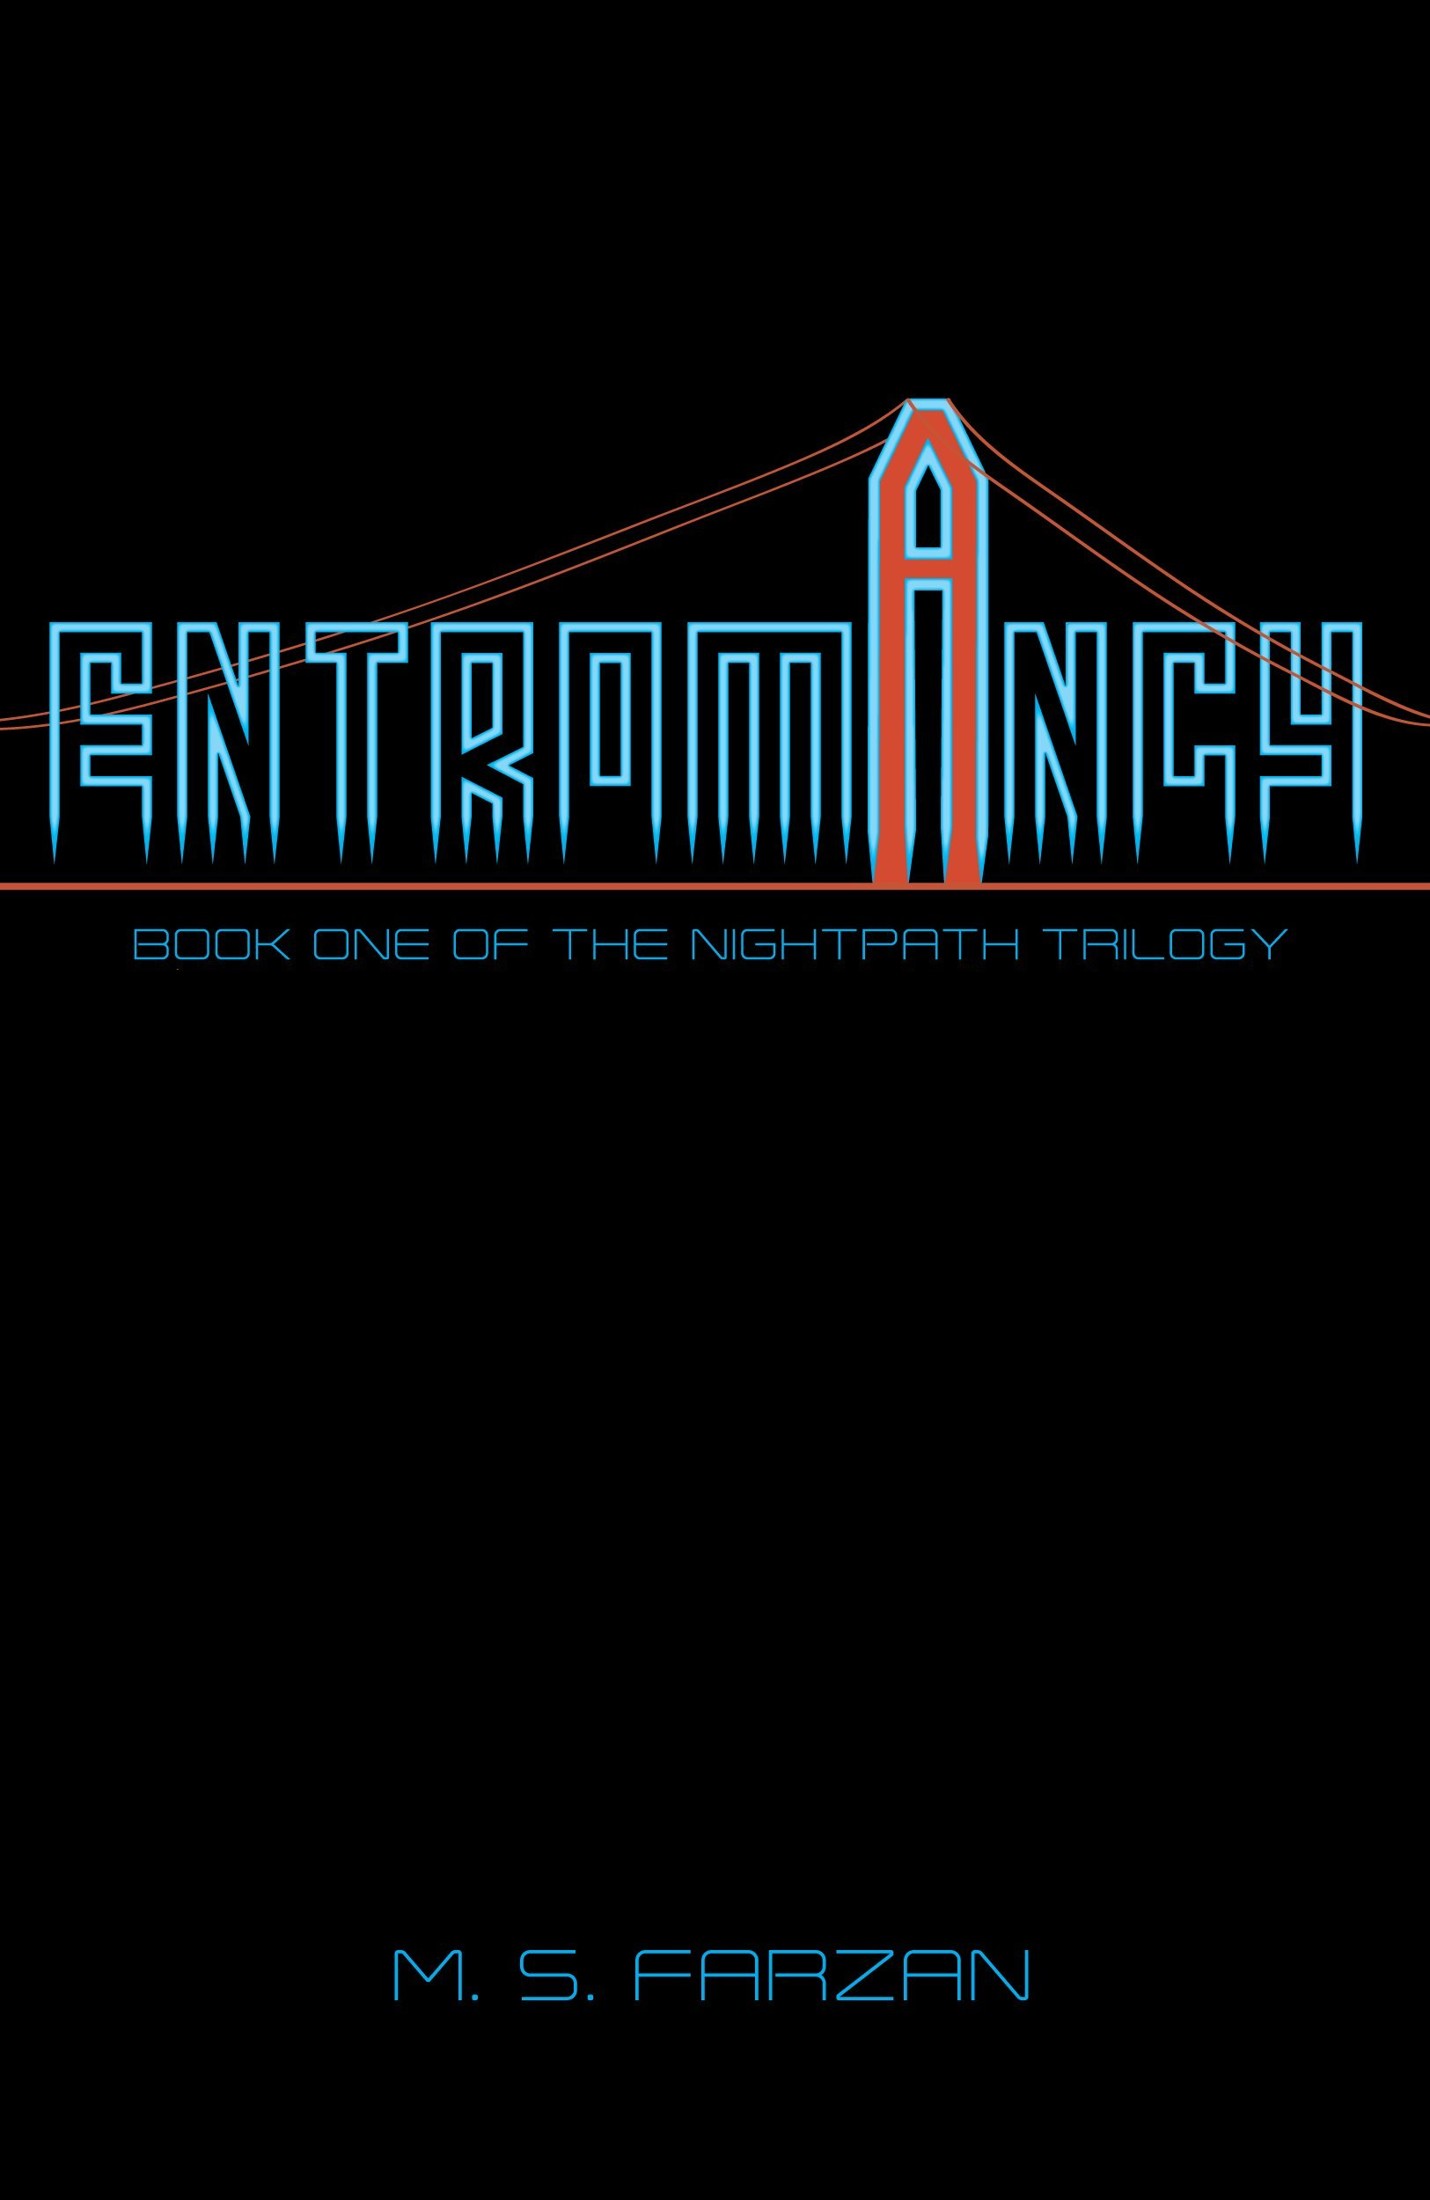 Entromancy (The Nightpath Trilogy Book 1)